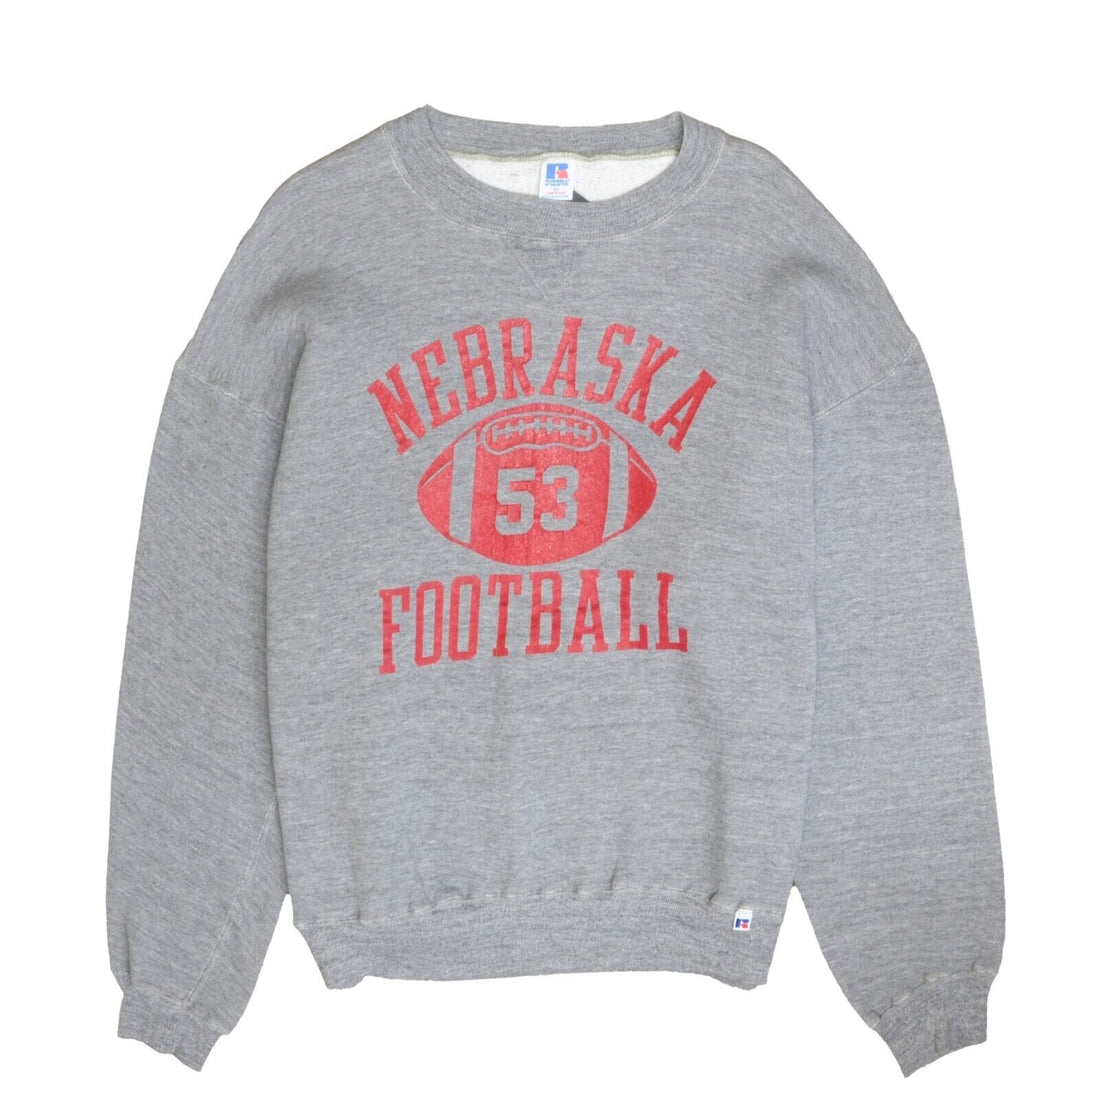 Vintage Nebraska Cornhuskers Football Sweatshirt Crewneck Size XL Gray NCAA